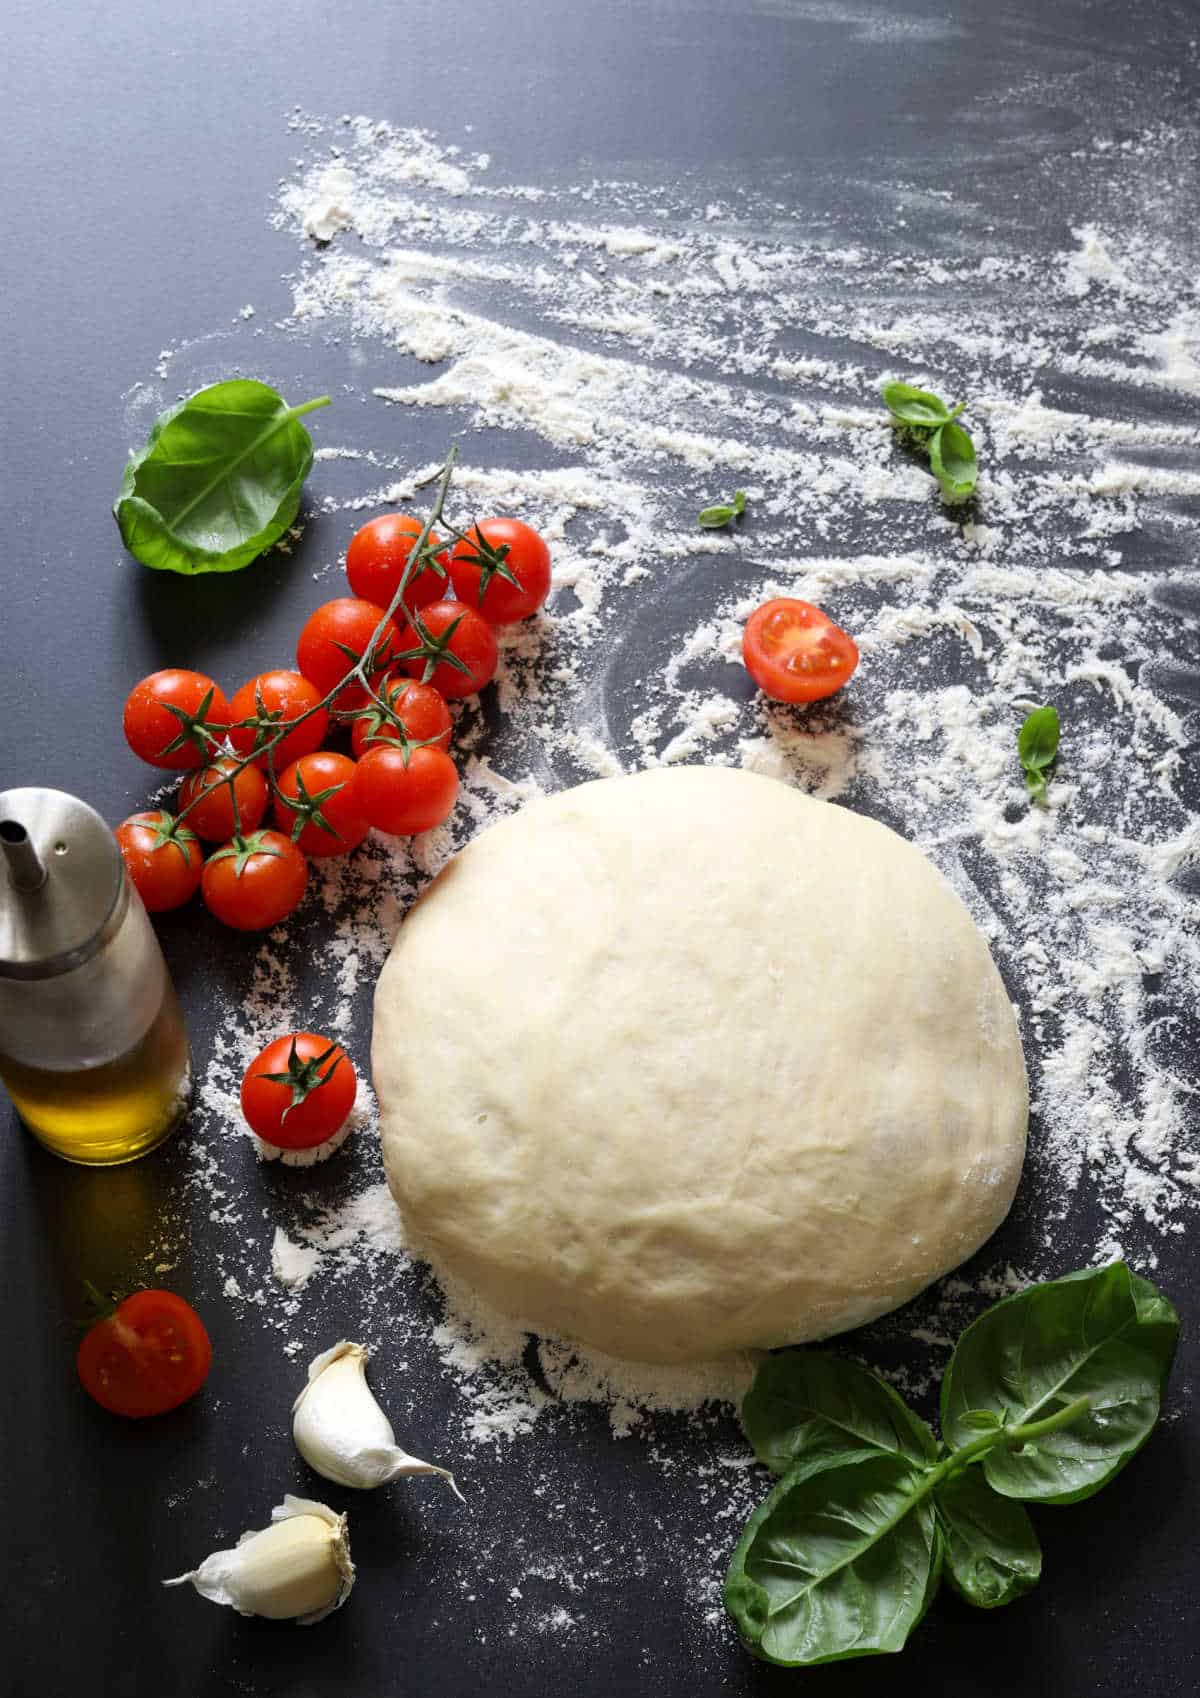 Pizza dough in a ball.